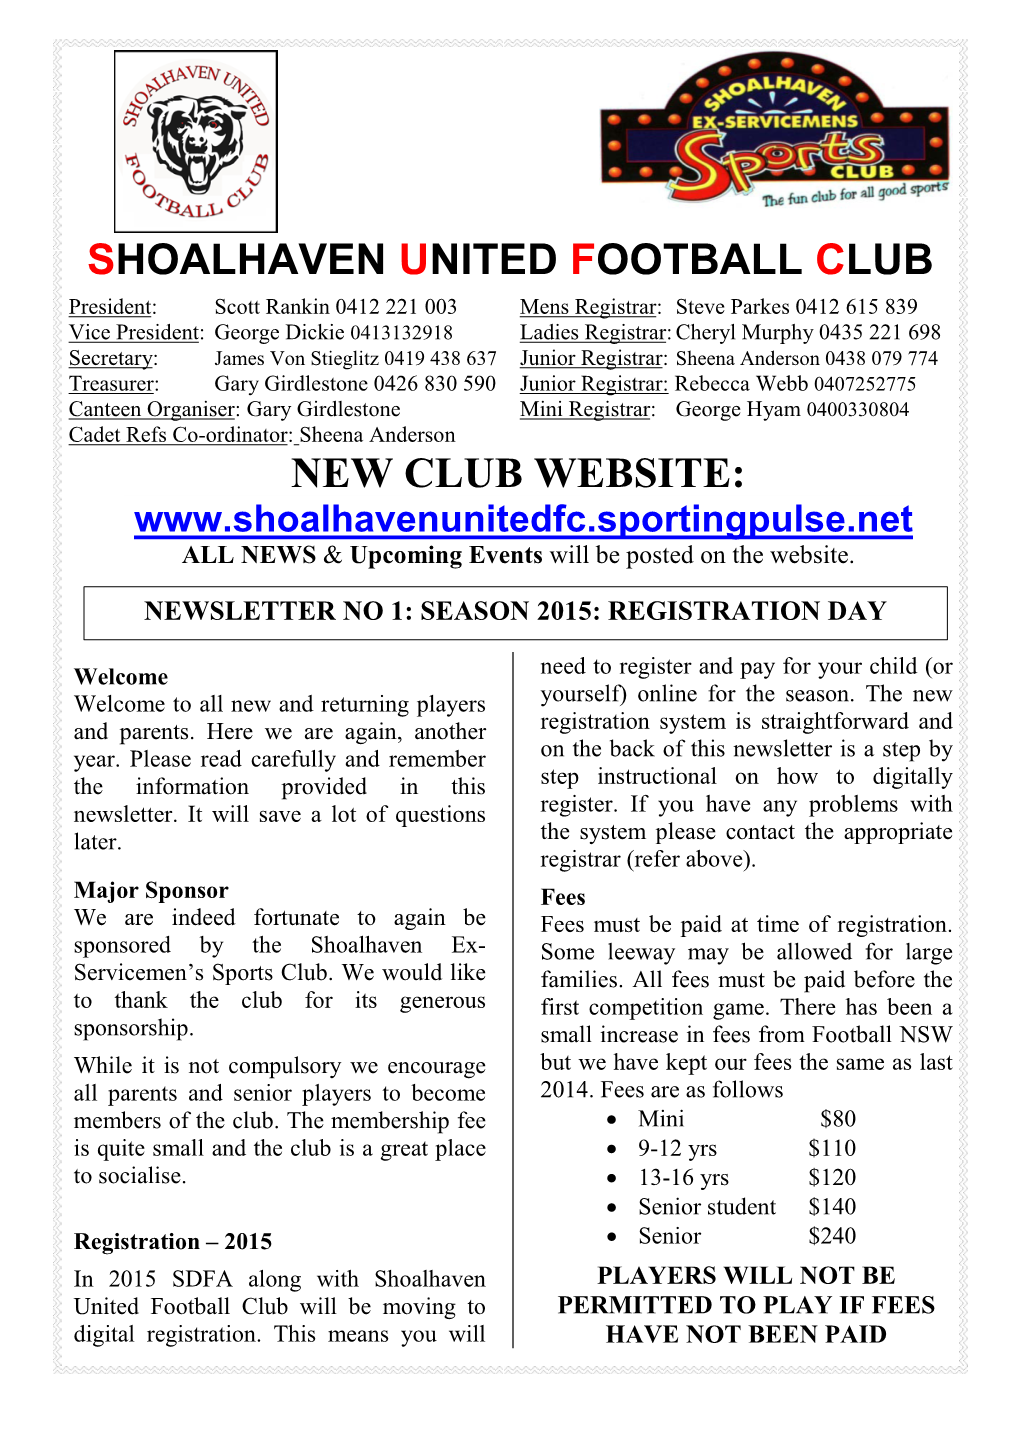 Shoalhaven United Football Club New Club Website